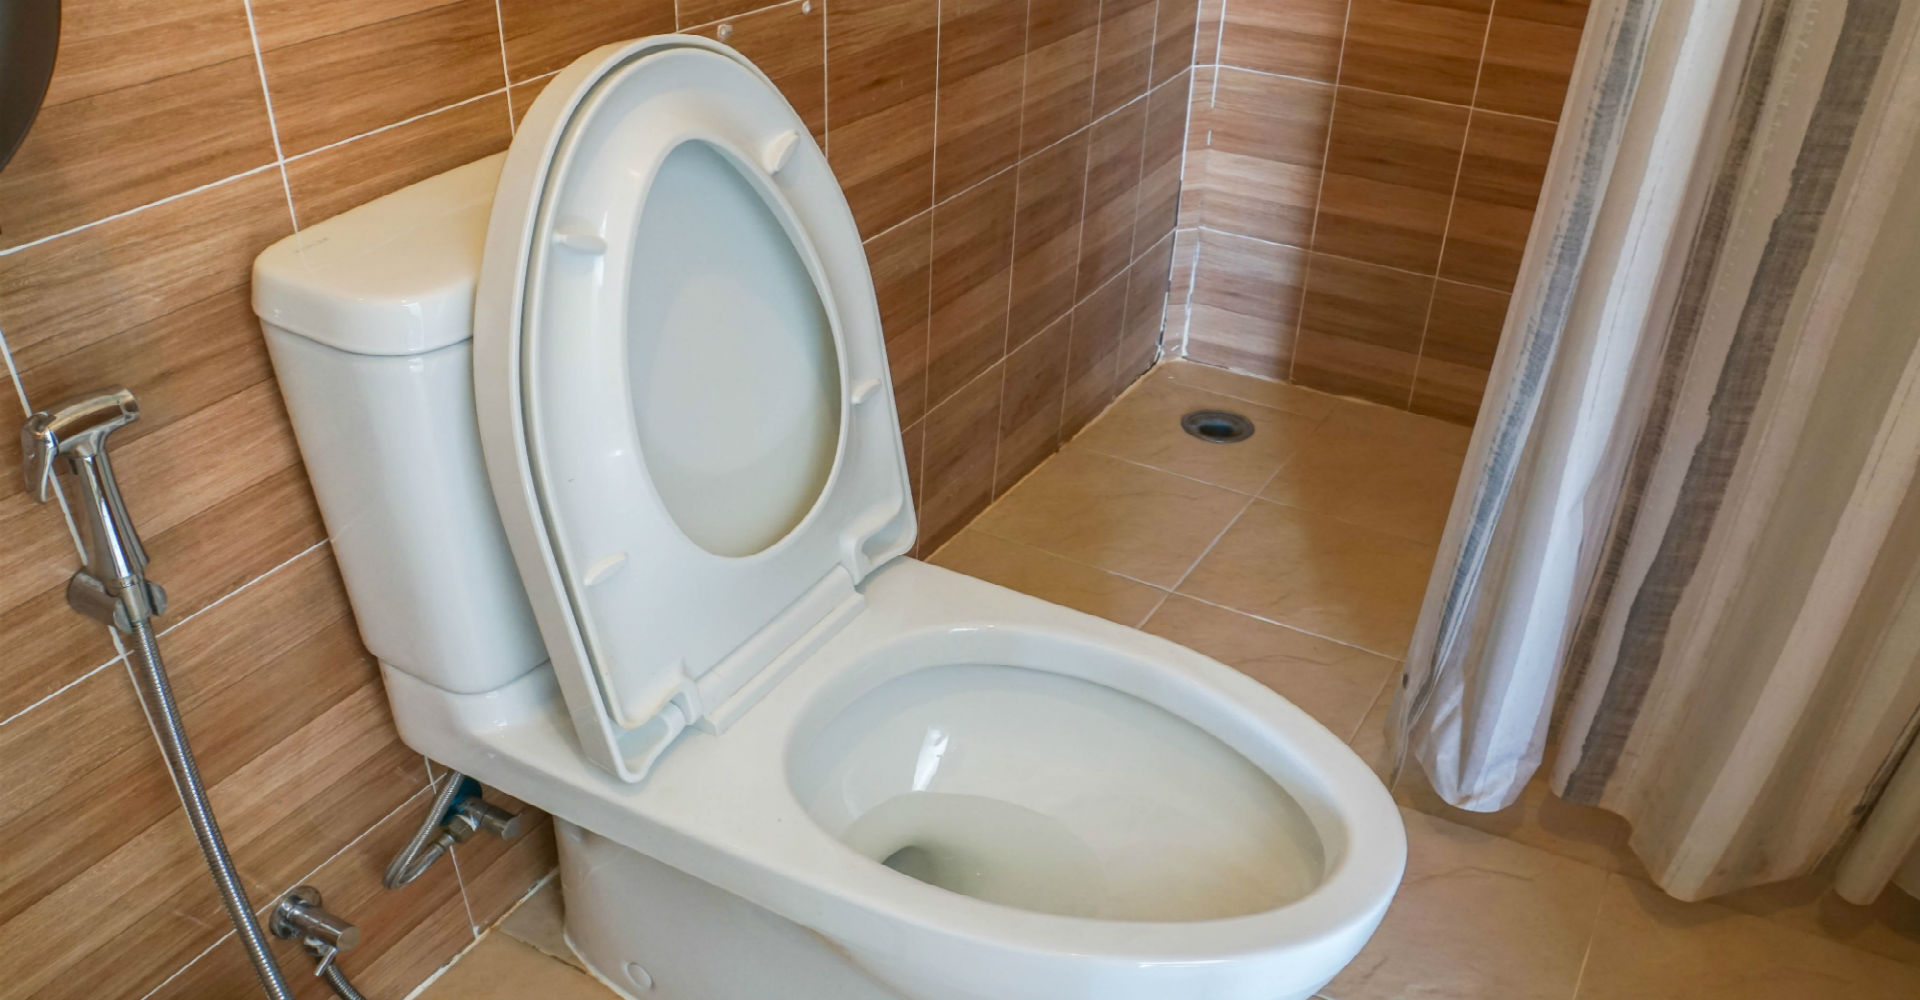 Diagnose-a-Leaking-Toilet